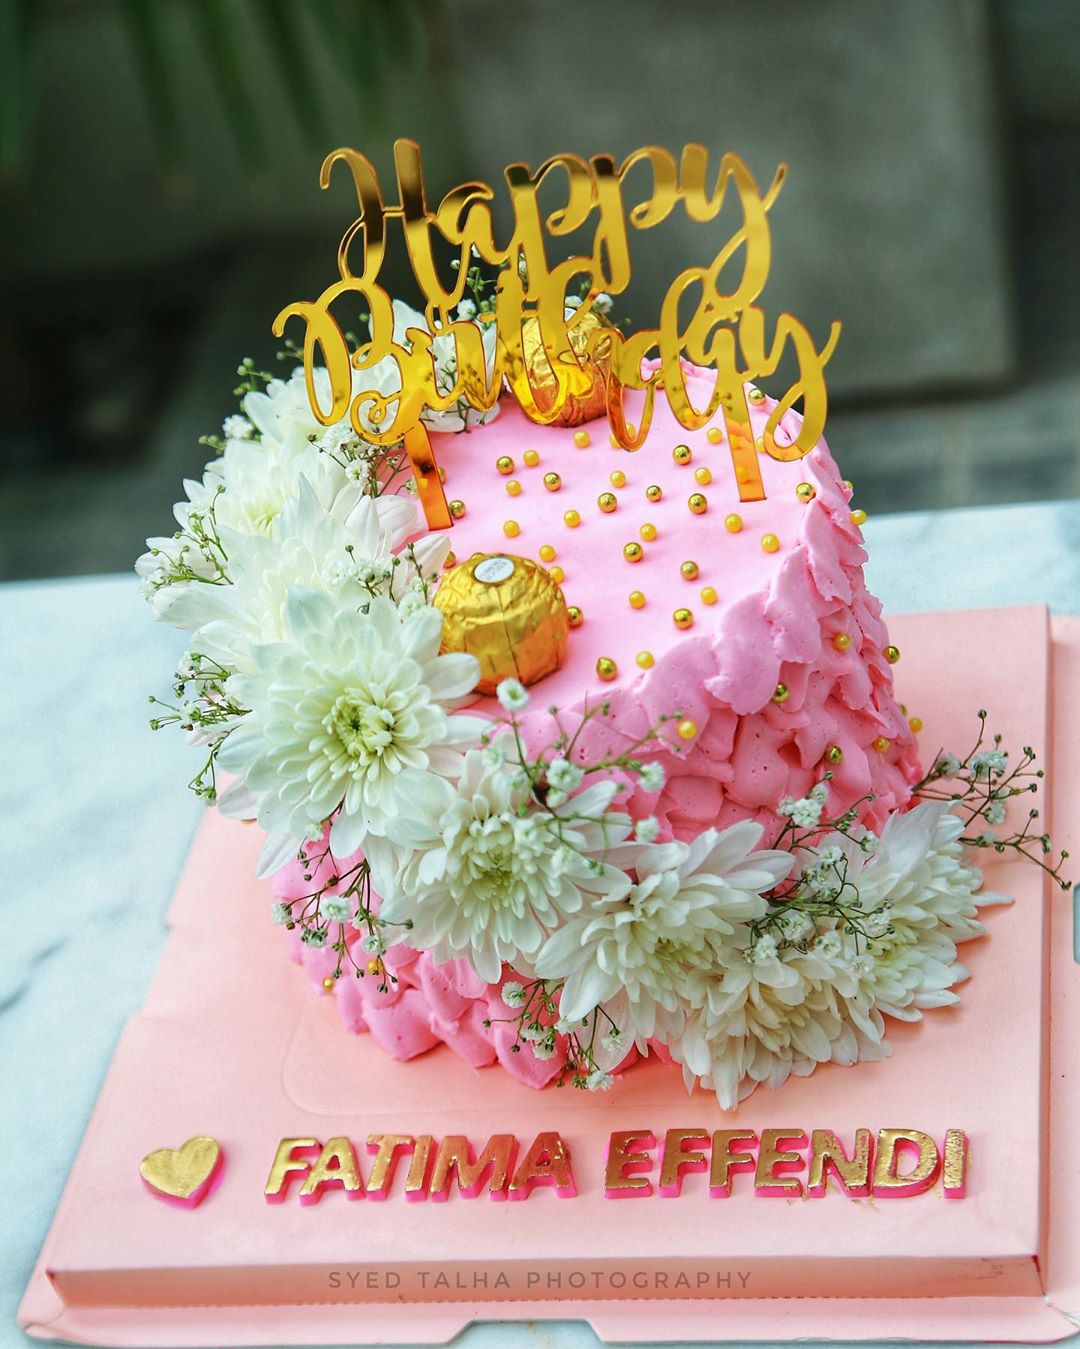 Fatima Effendi Celebrated Her Birthday with her Husband and Kids